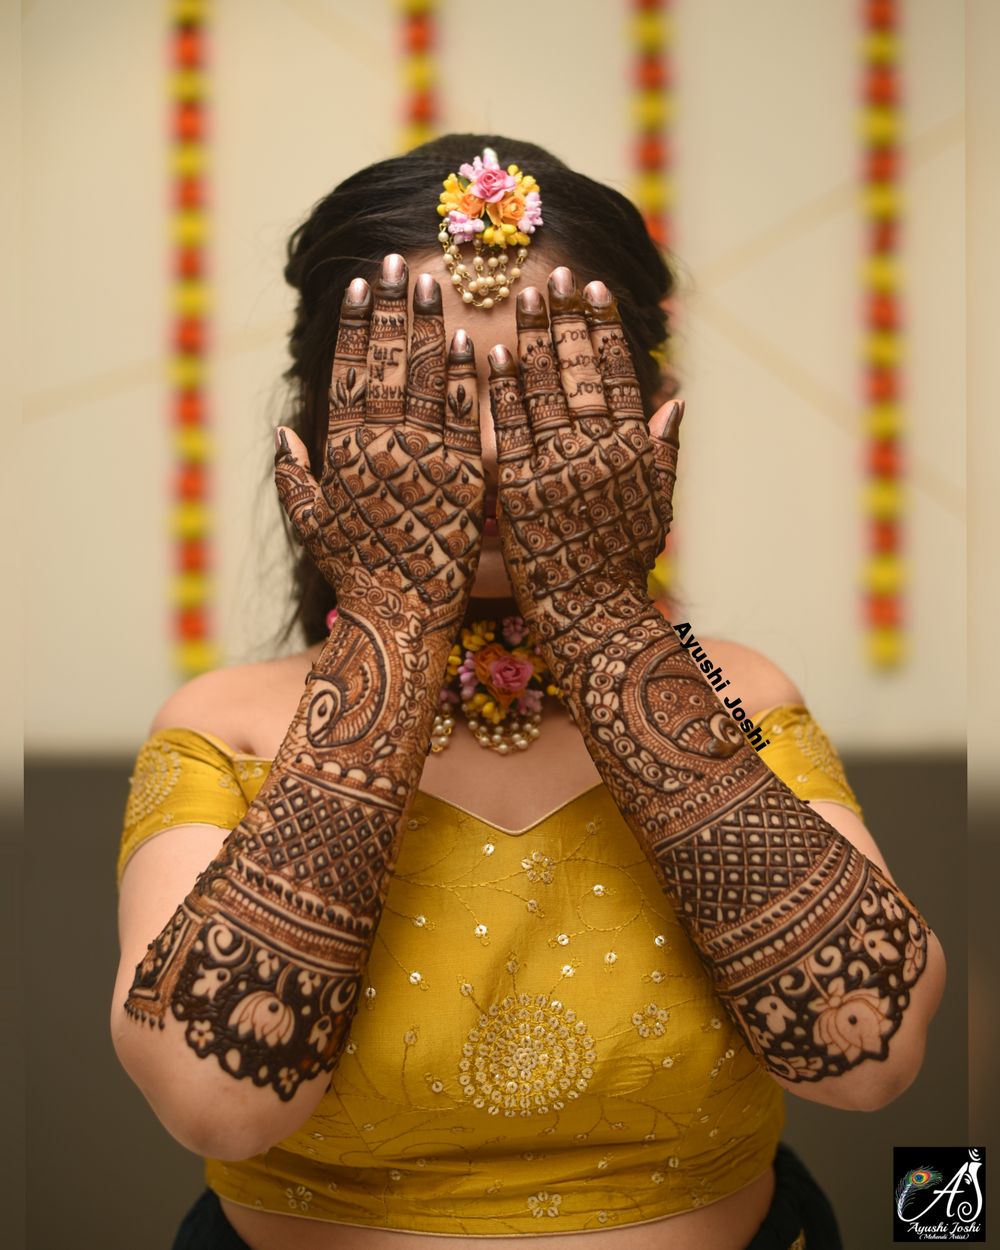 Photo From Bridal Mehendi designs - By Ayushi Joshi Mehendi Artist